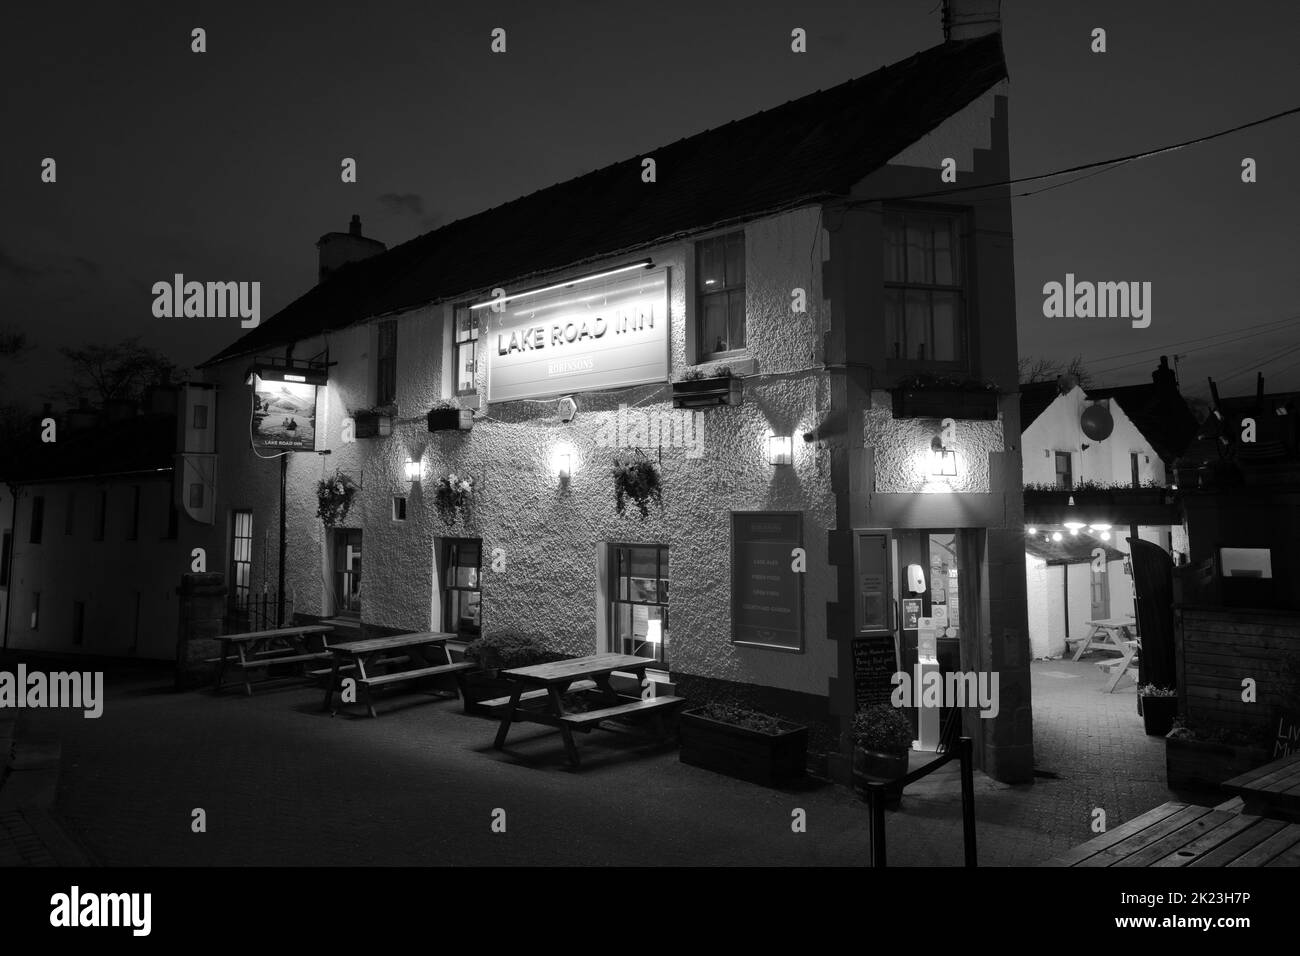 The Lake Road Inn Pub, Keswick town, Lake District National Park, Cumbria County, England, UK Stock Photo